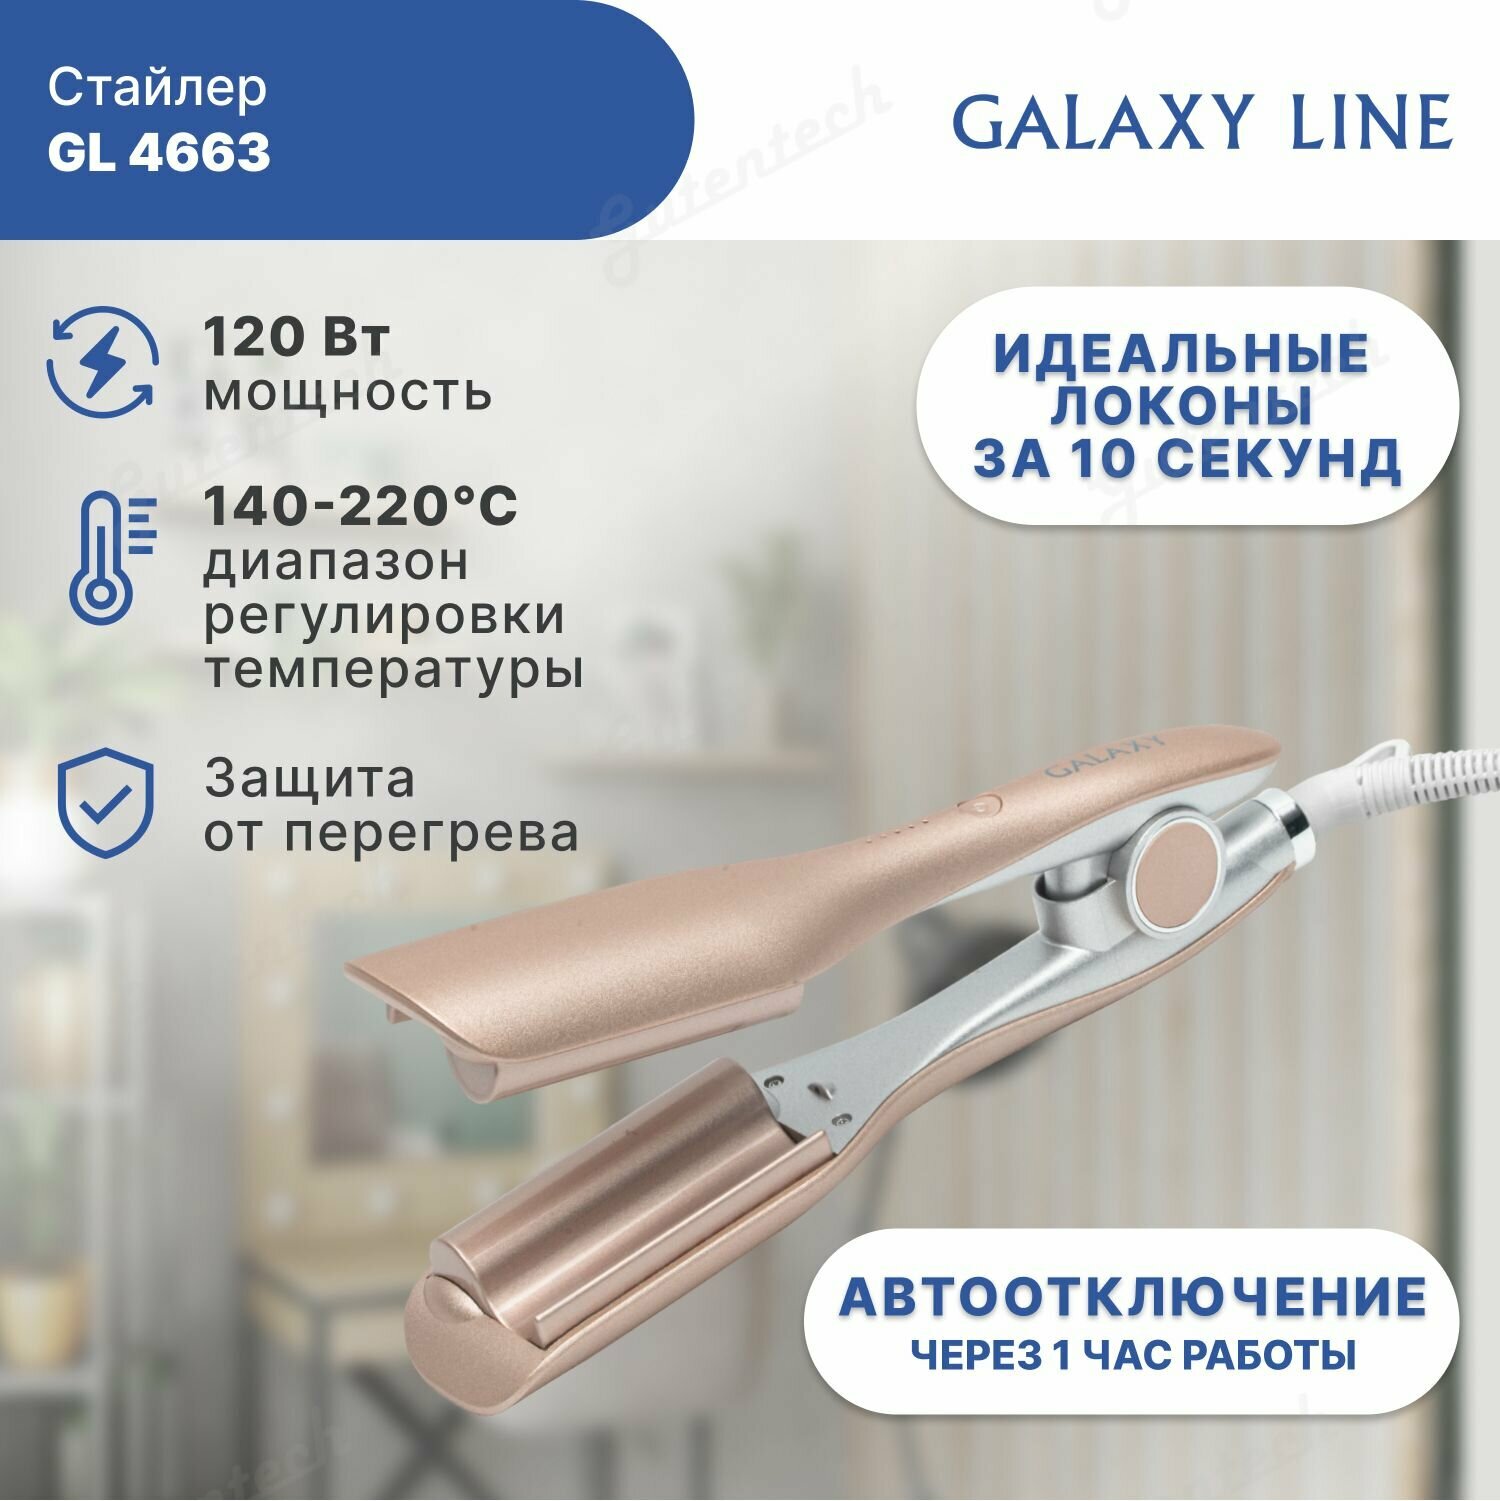 GALAXY LINE GL 4663 Стайлер, мощность 120 Вт